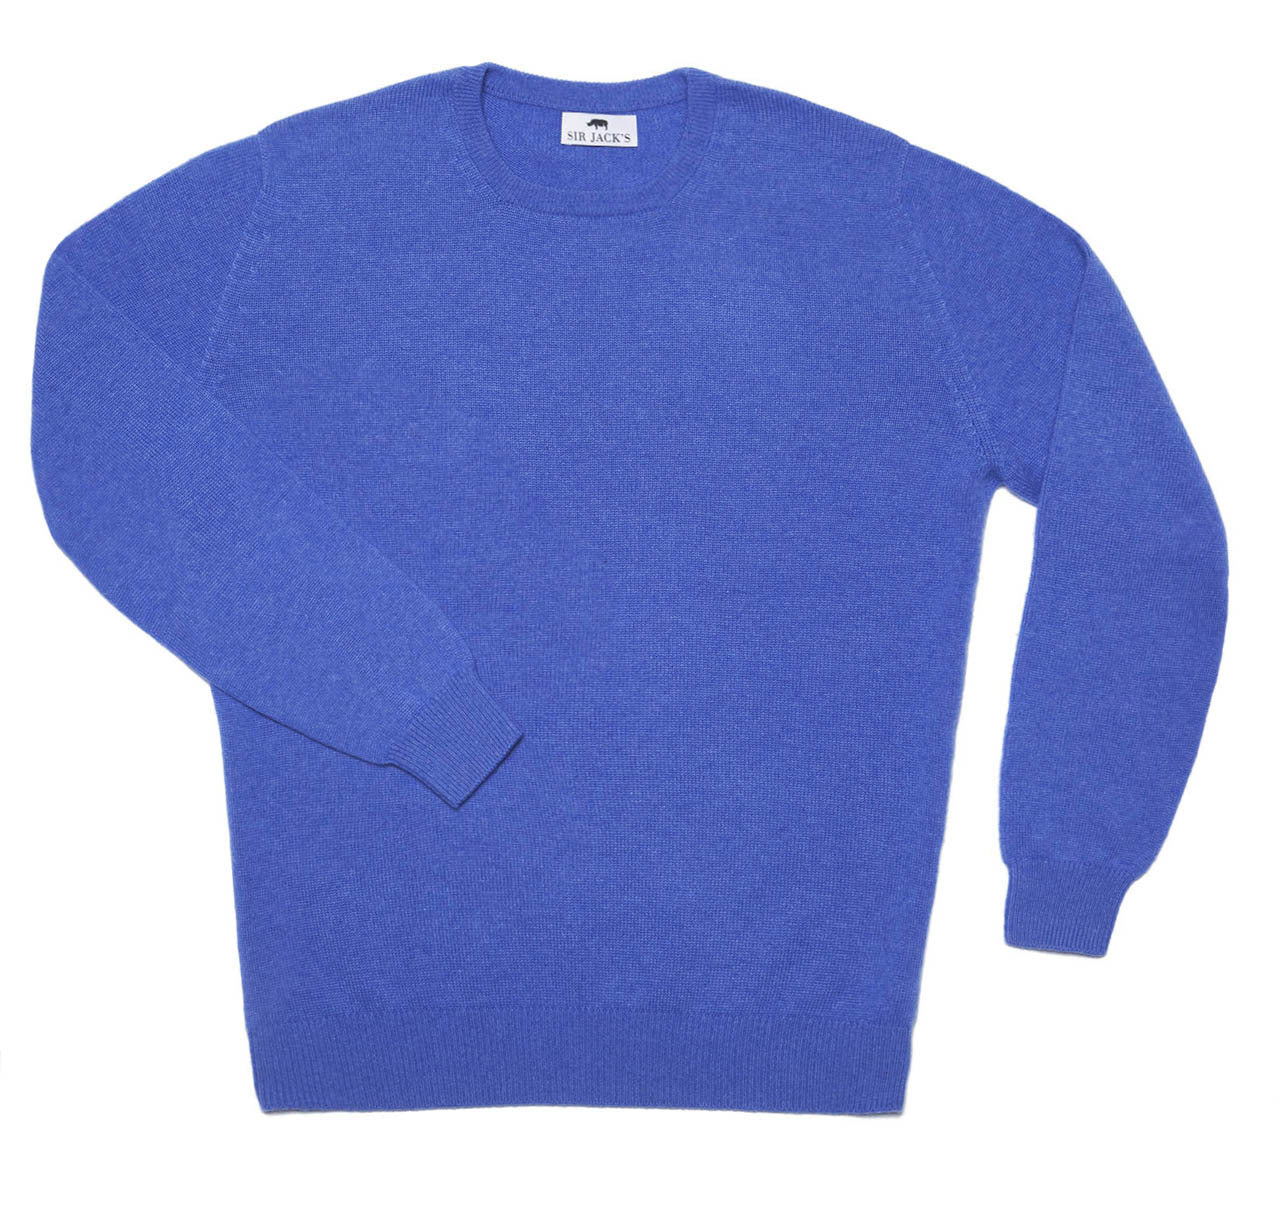 Sir Jack's Cashmere Crewneck Sweater in Ocean Blue